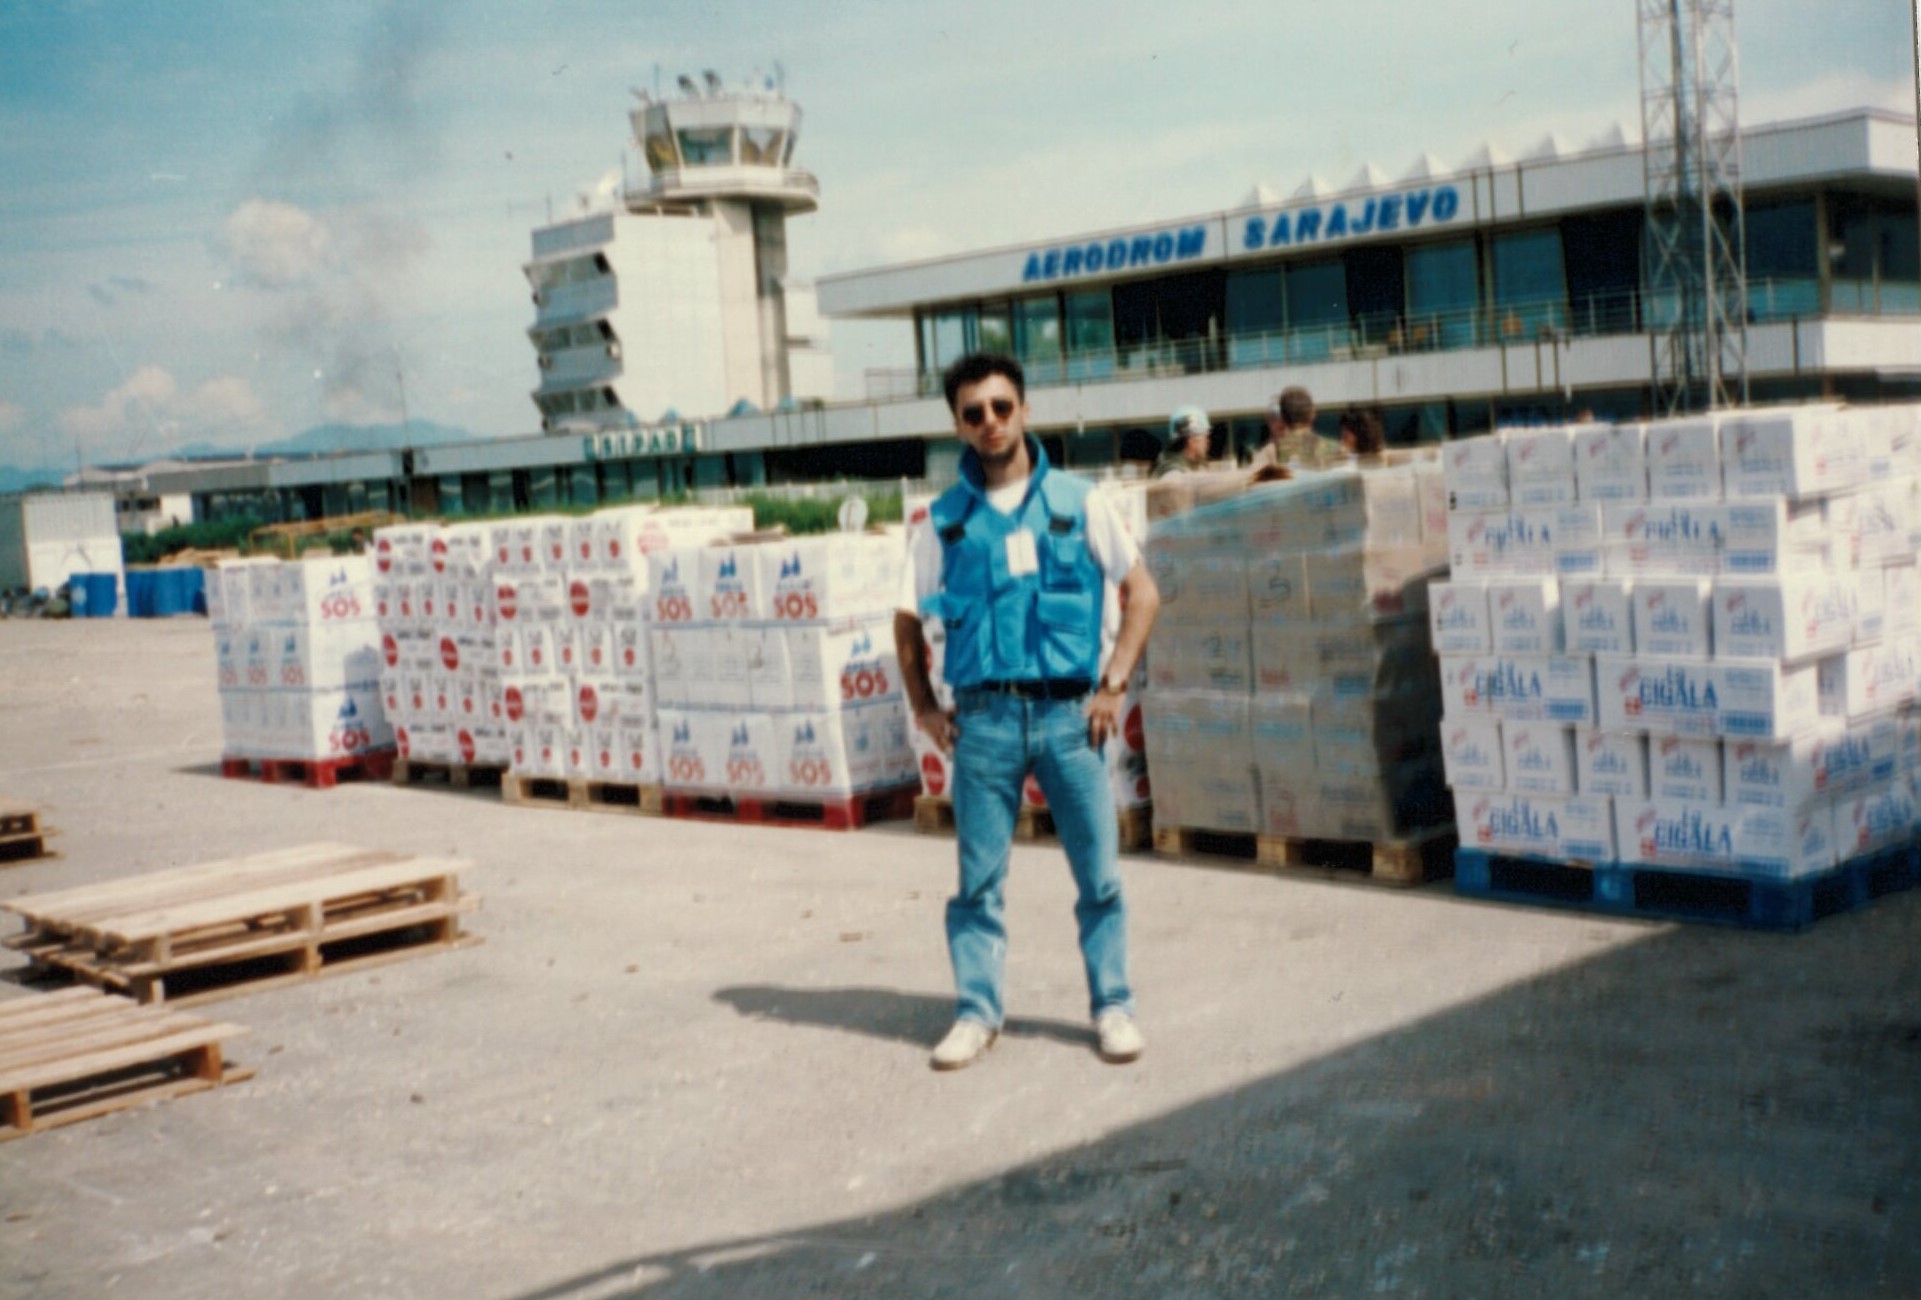 humanitarian-aid_-airport-summer-1993-2.jpg